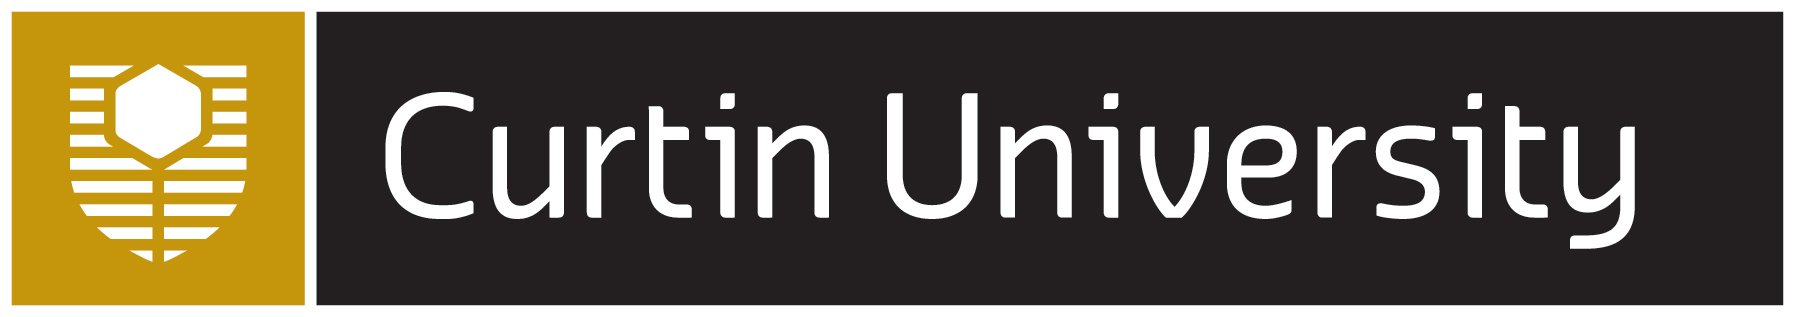 Curtin University Master Logo PMS 125 Keyline.jpg